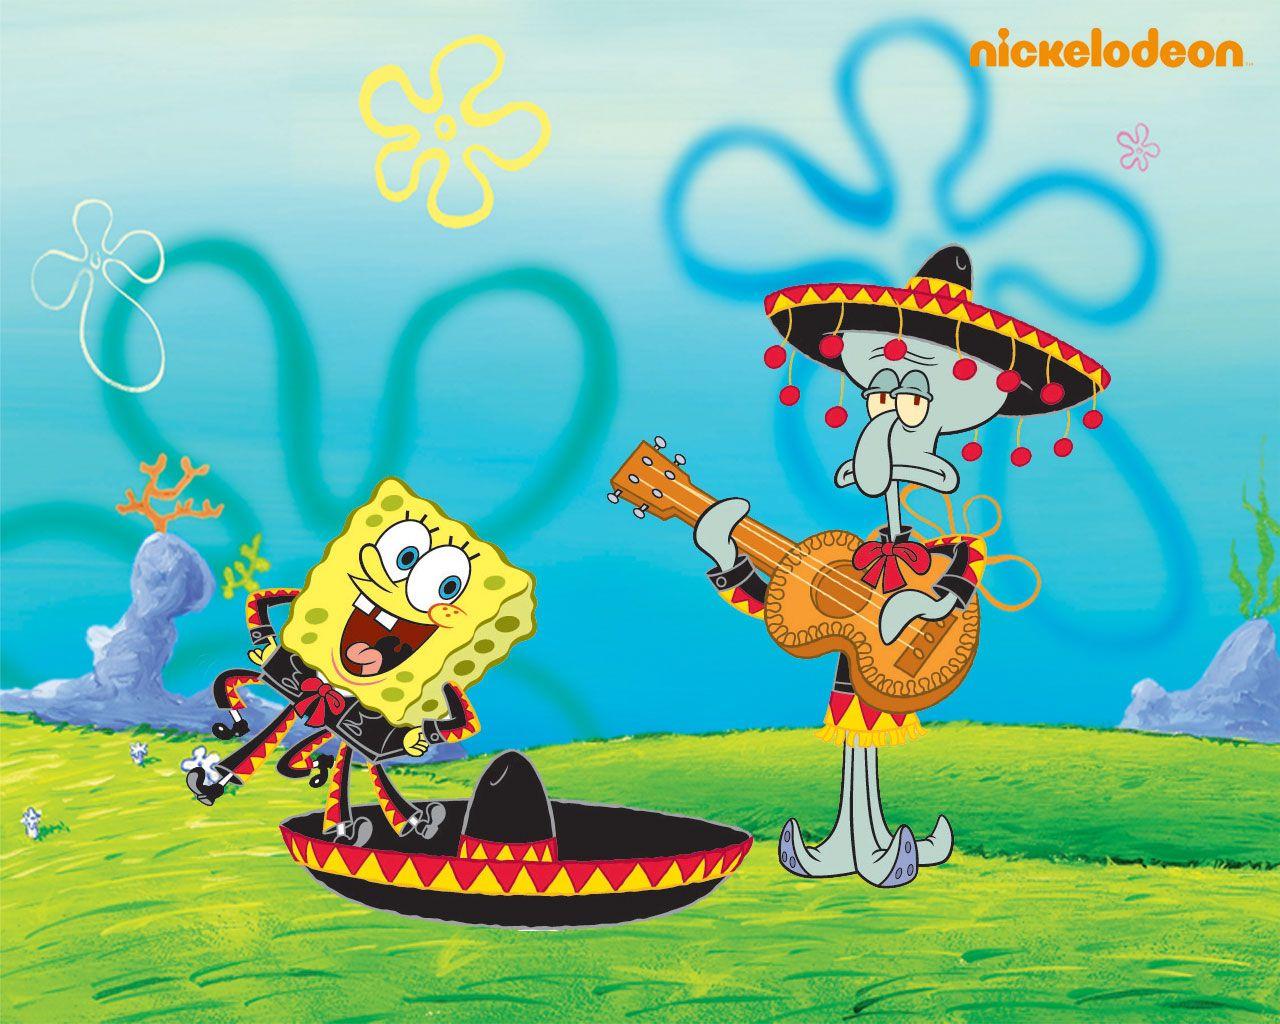 Squidwards Spongebob Background Desktop. Best Image Background